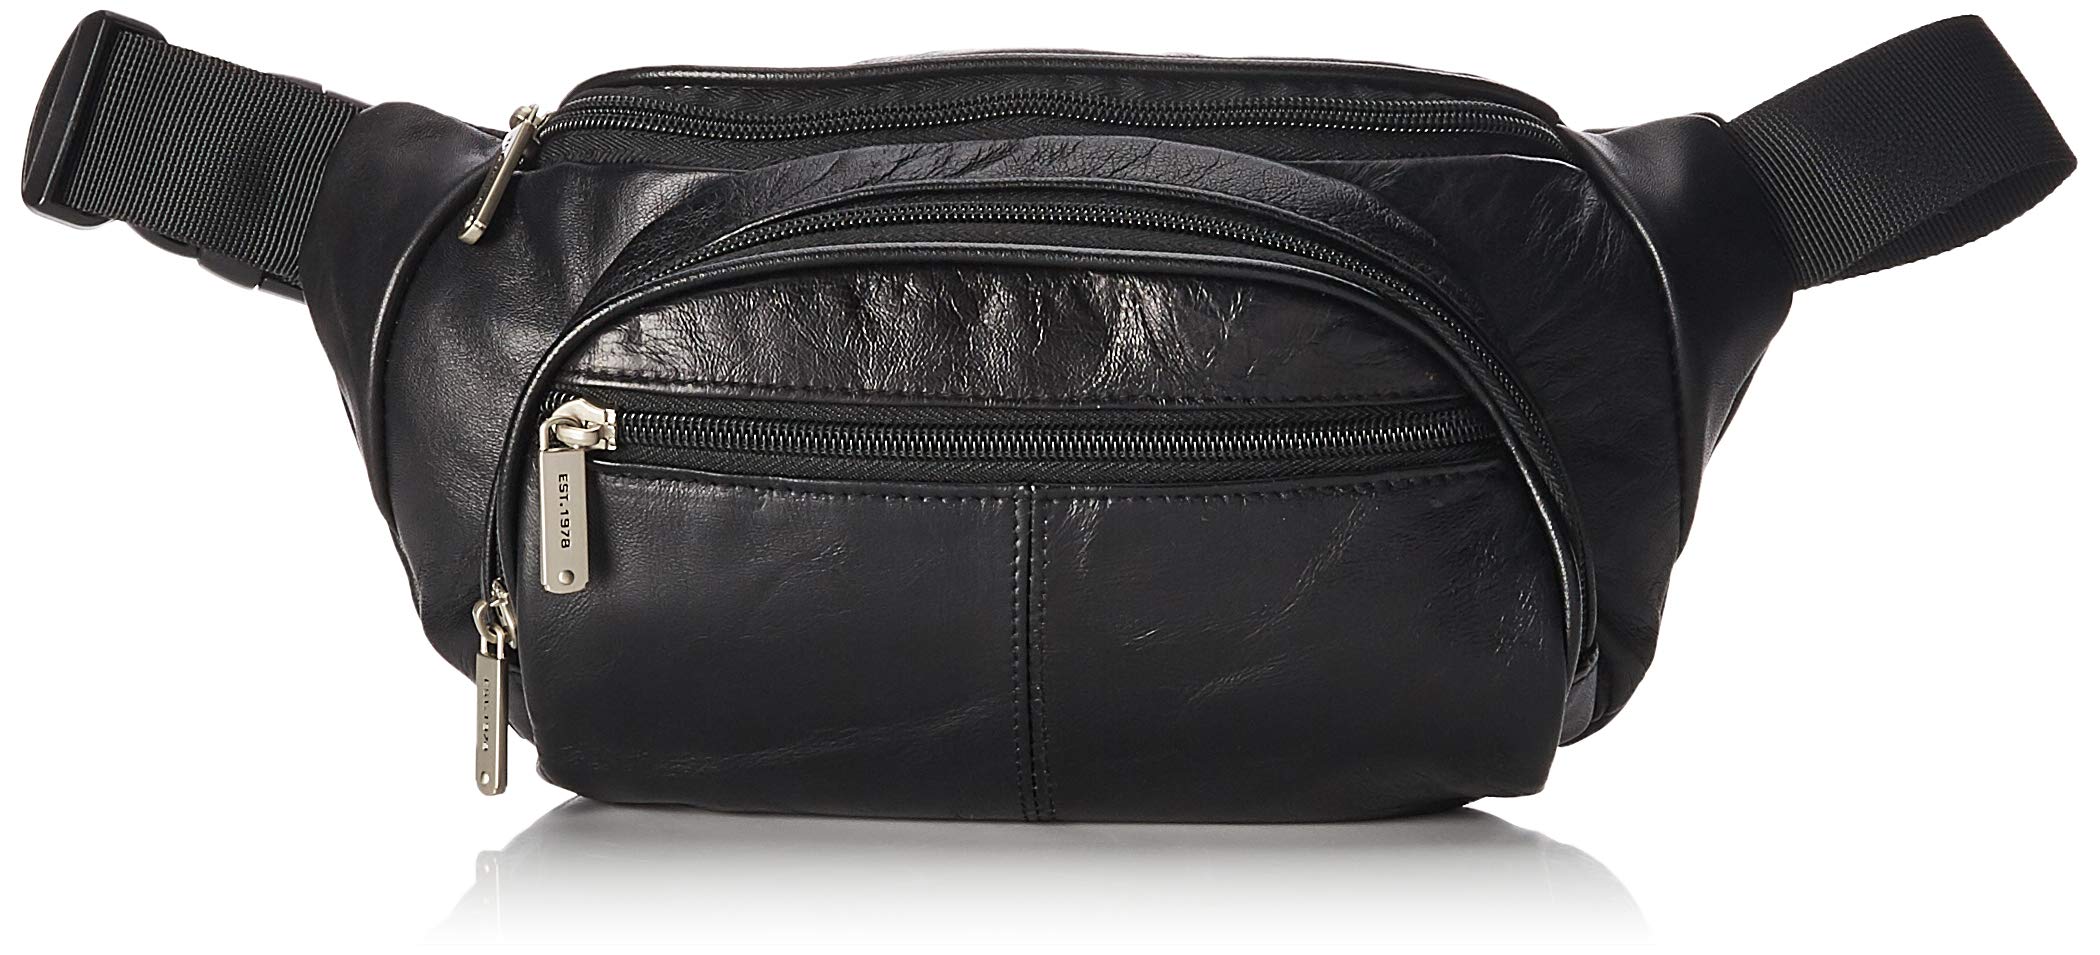 Travelon: RFID Blocking Leather Waist Pack - Black